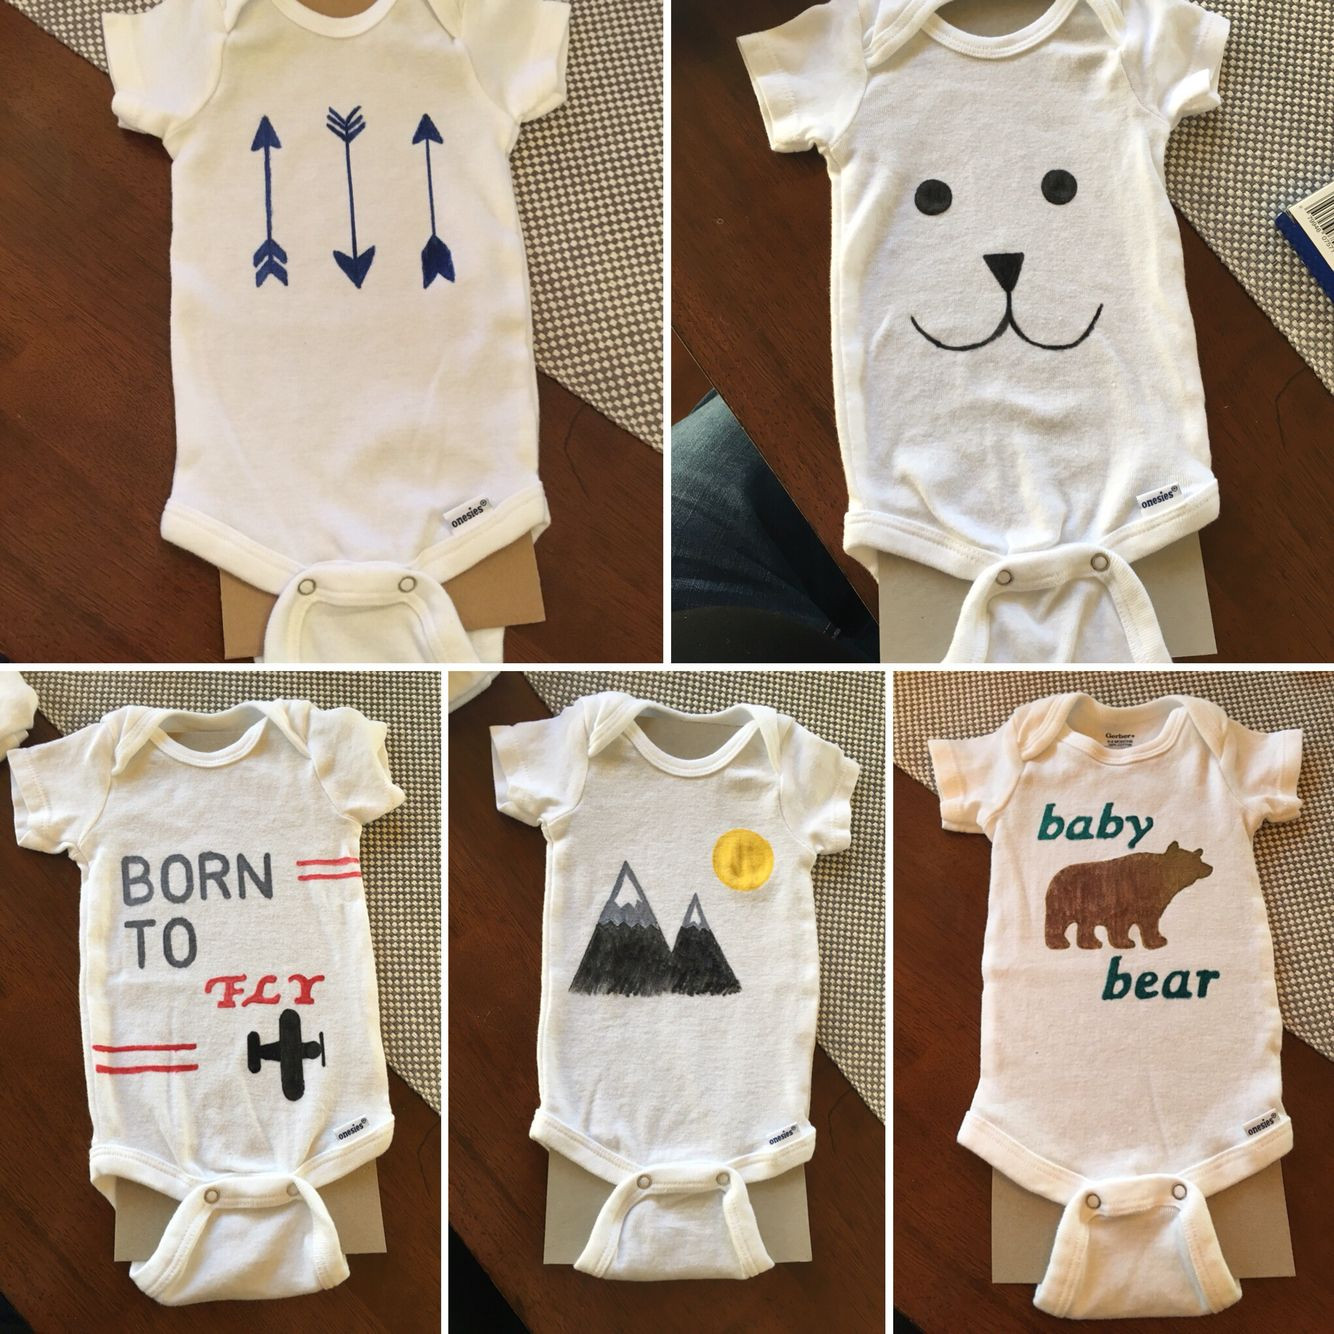 DIY Onesies Baby Shower
 DIY Fabric marker onesies pleted projects